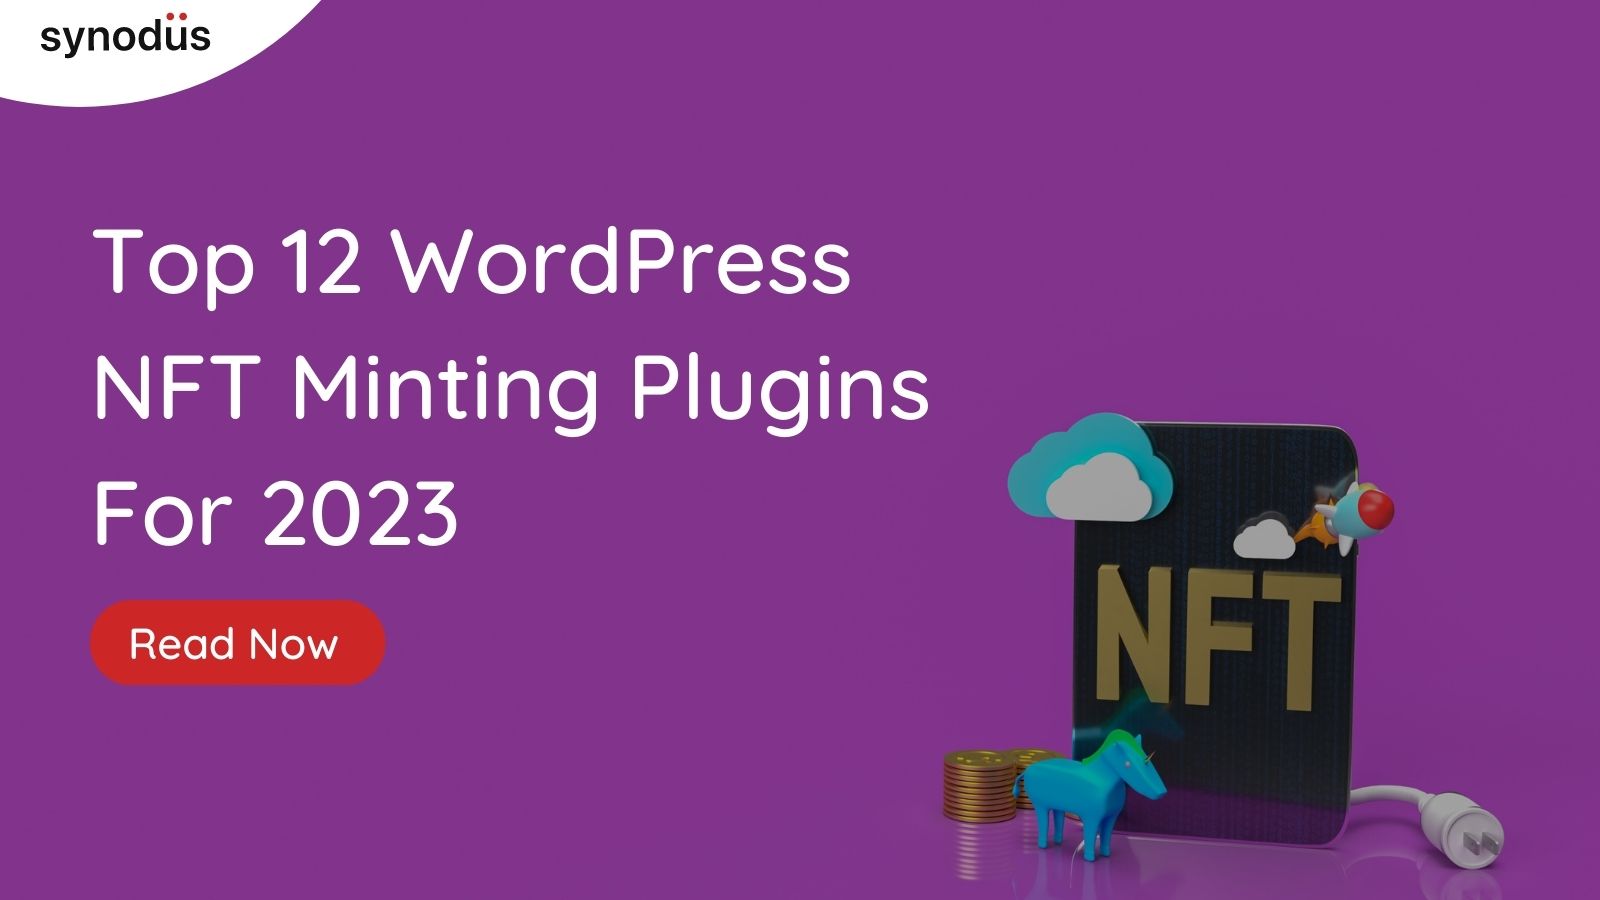 Top 12 Wordpress NFT Minting Plugins For 2023